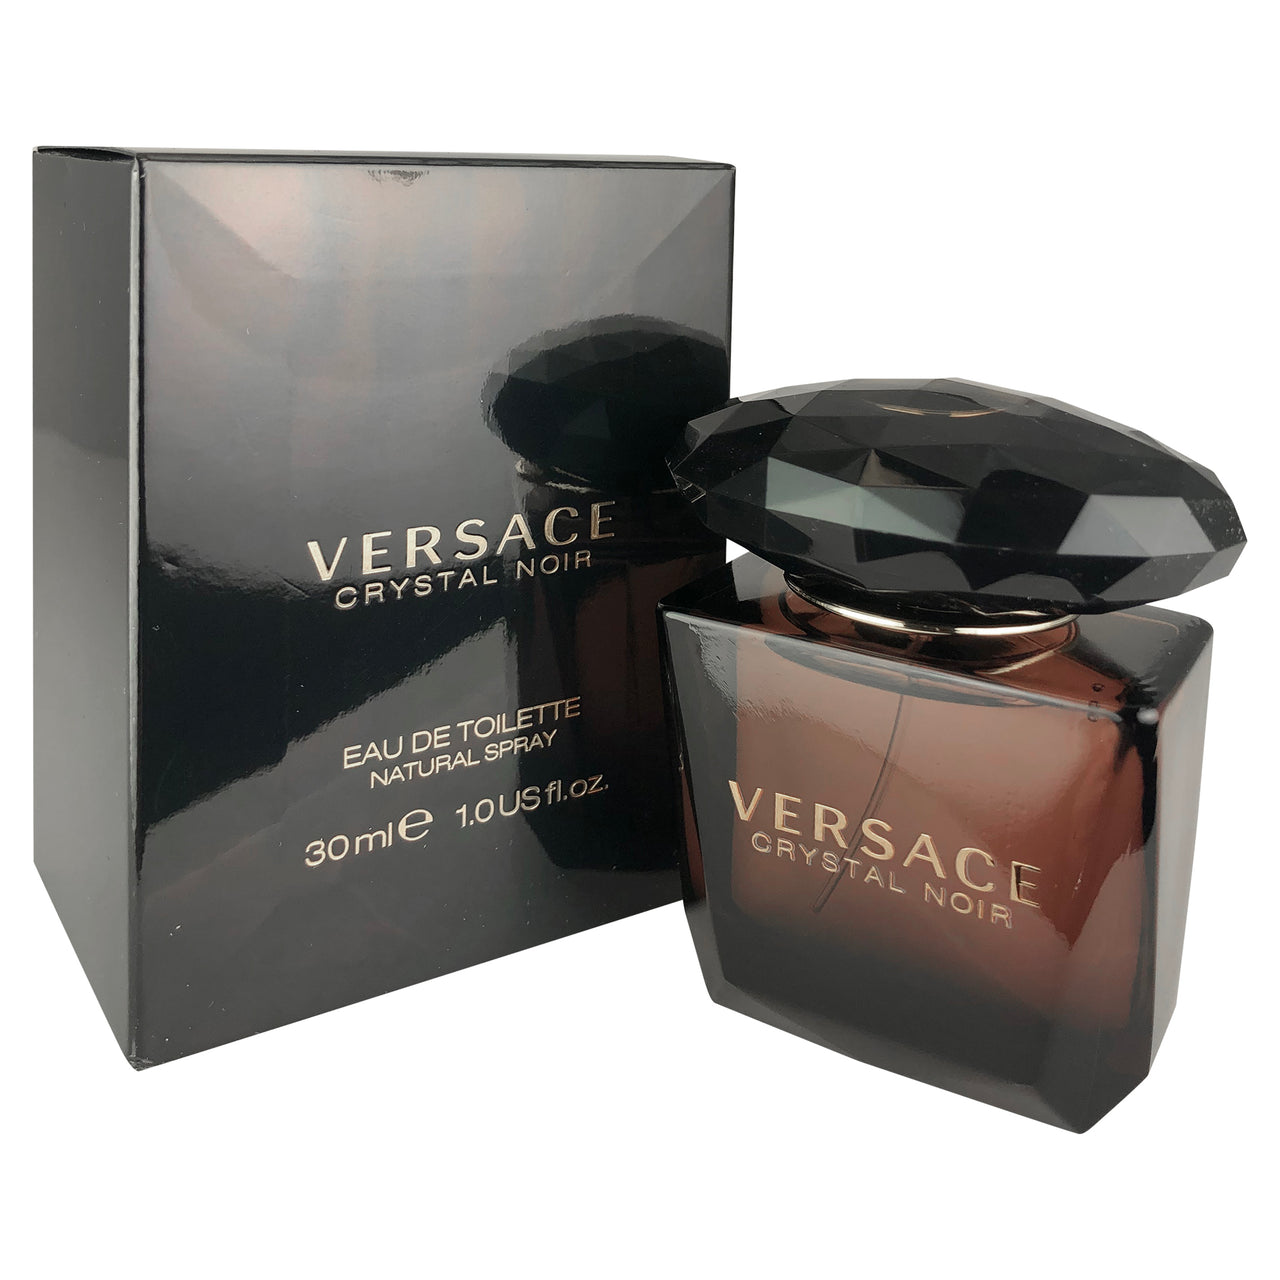 Versace Crystal Noir For Women by Versace 1.0 oz Eau de Toilette Spray